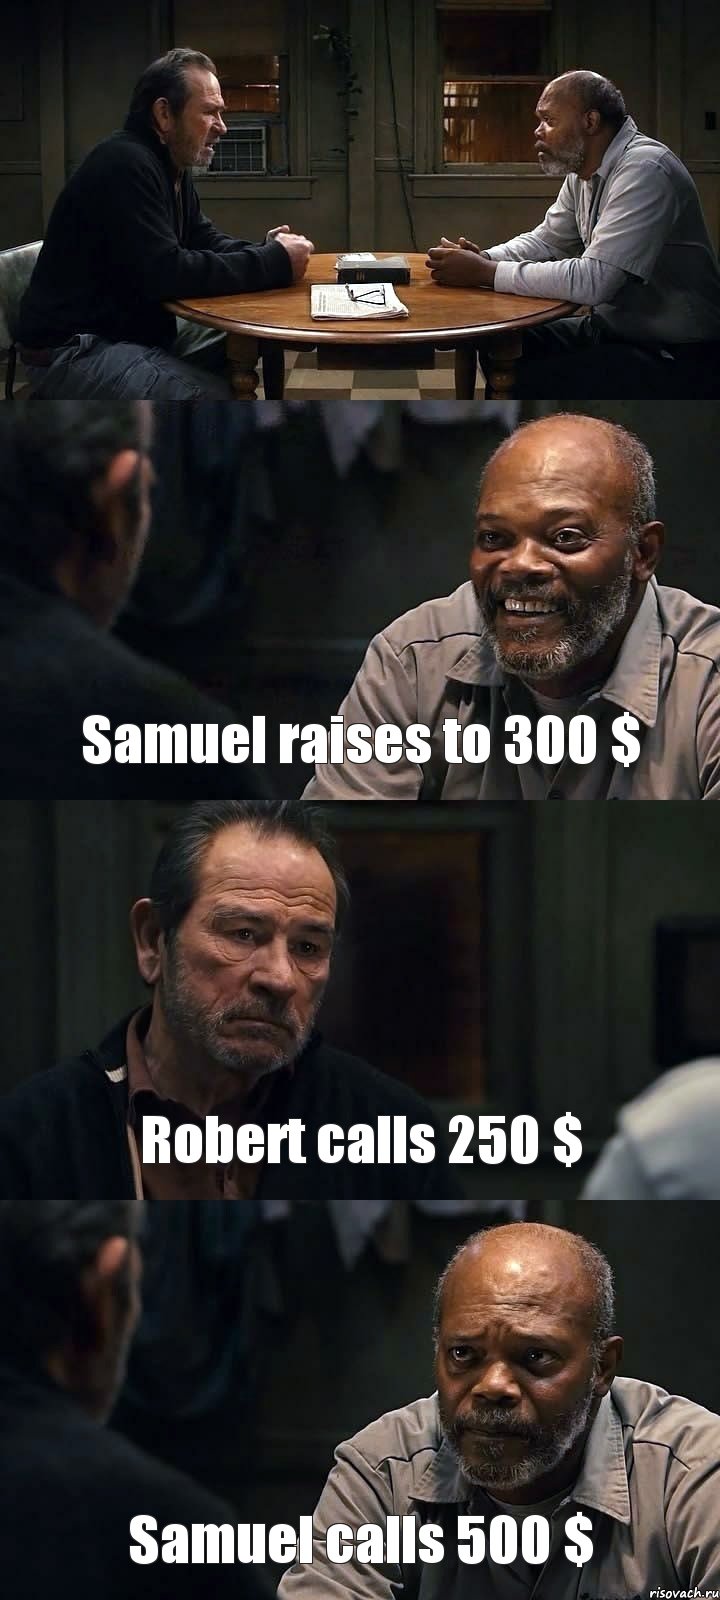  Samuel raises to 300 $ Robert calls 250 $ Samuel calls 500 $, Комикс The Sunset Limited